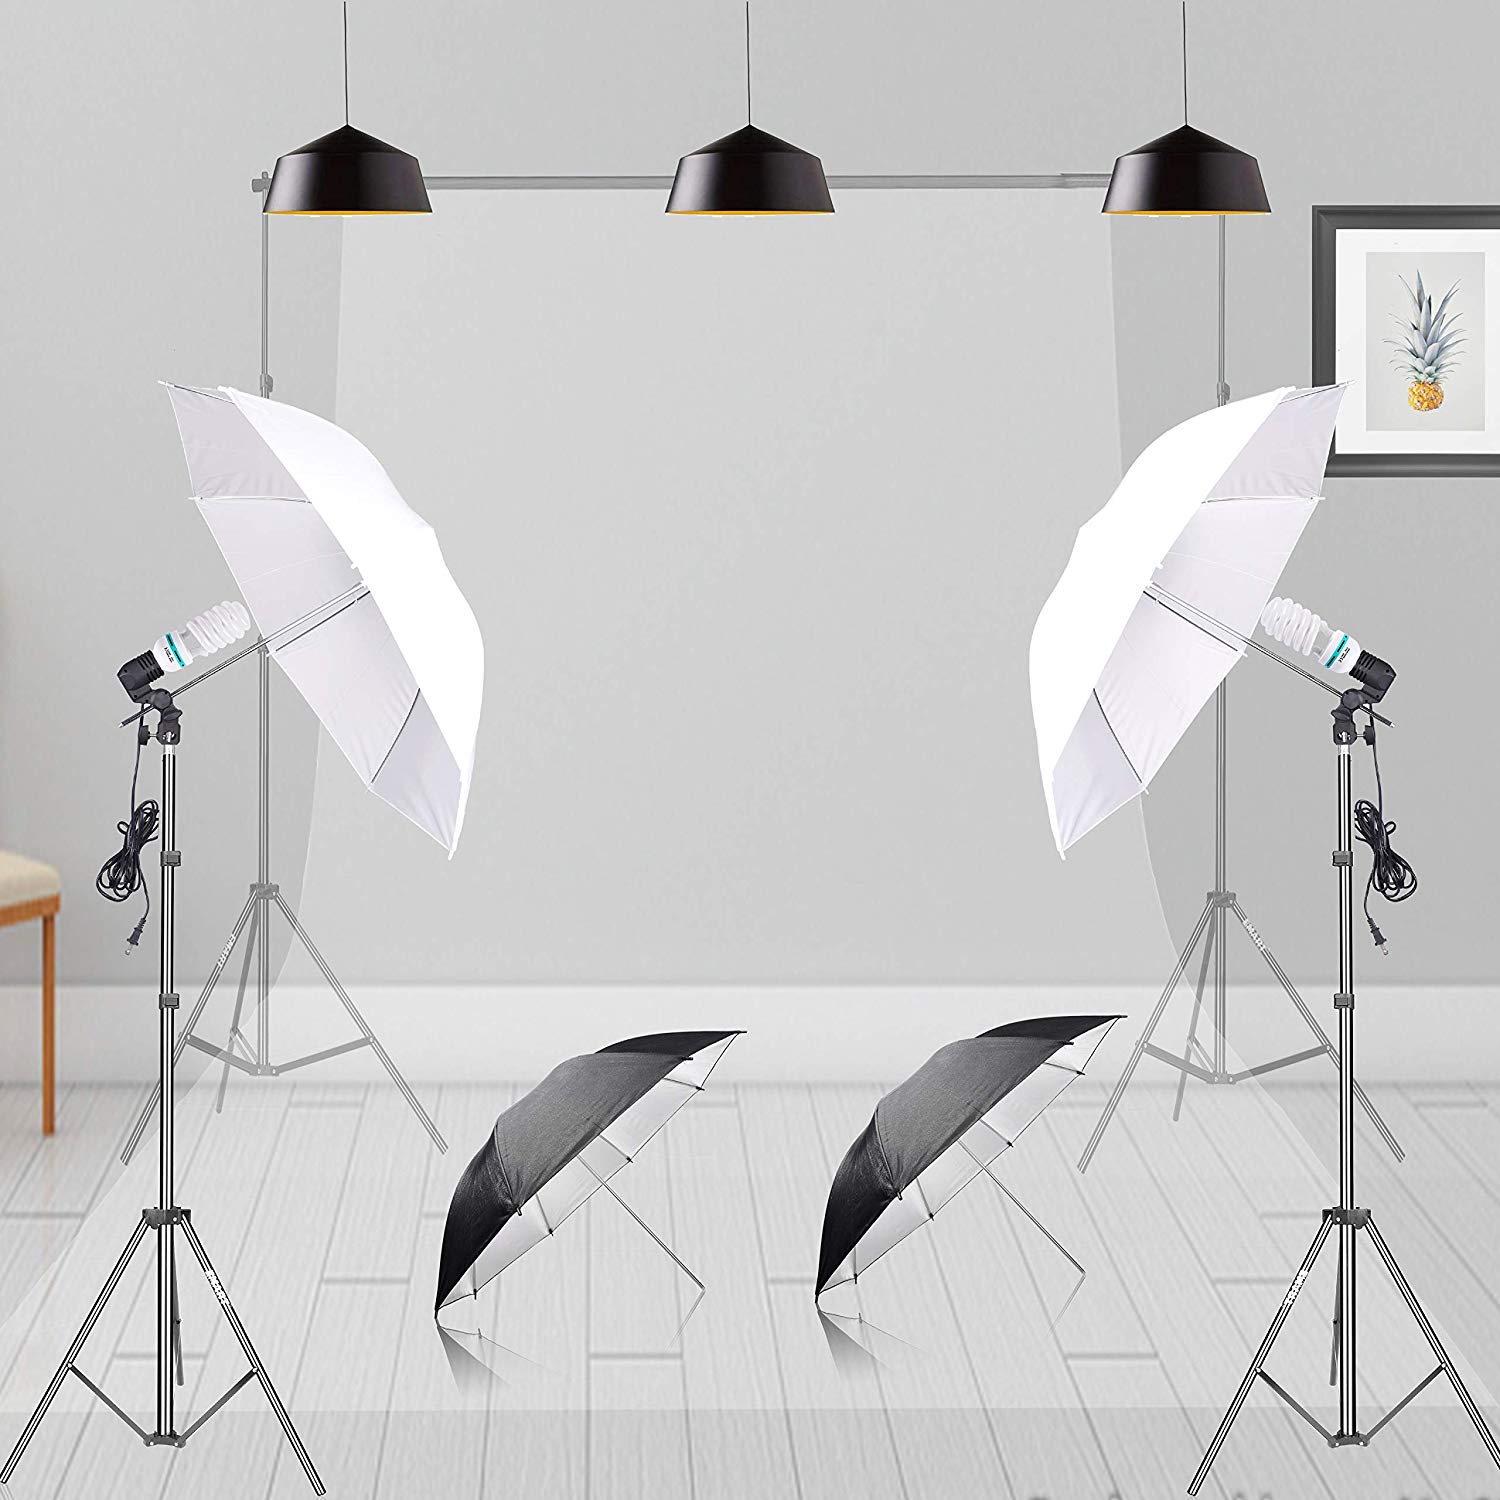 EMART 1000w, 5500k Umbrella Lighting Kit for Photography, Daylight Umbrella Continuous Lighting - EMART INTERNATIONAL, INC (Official Website)